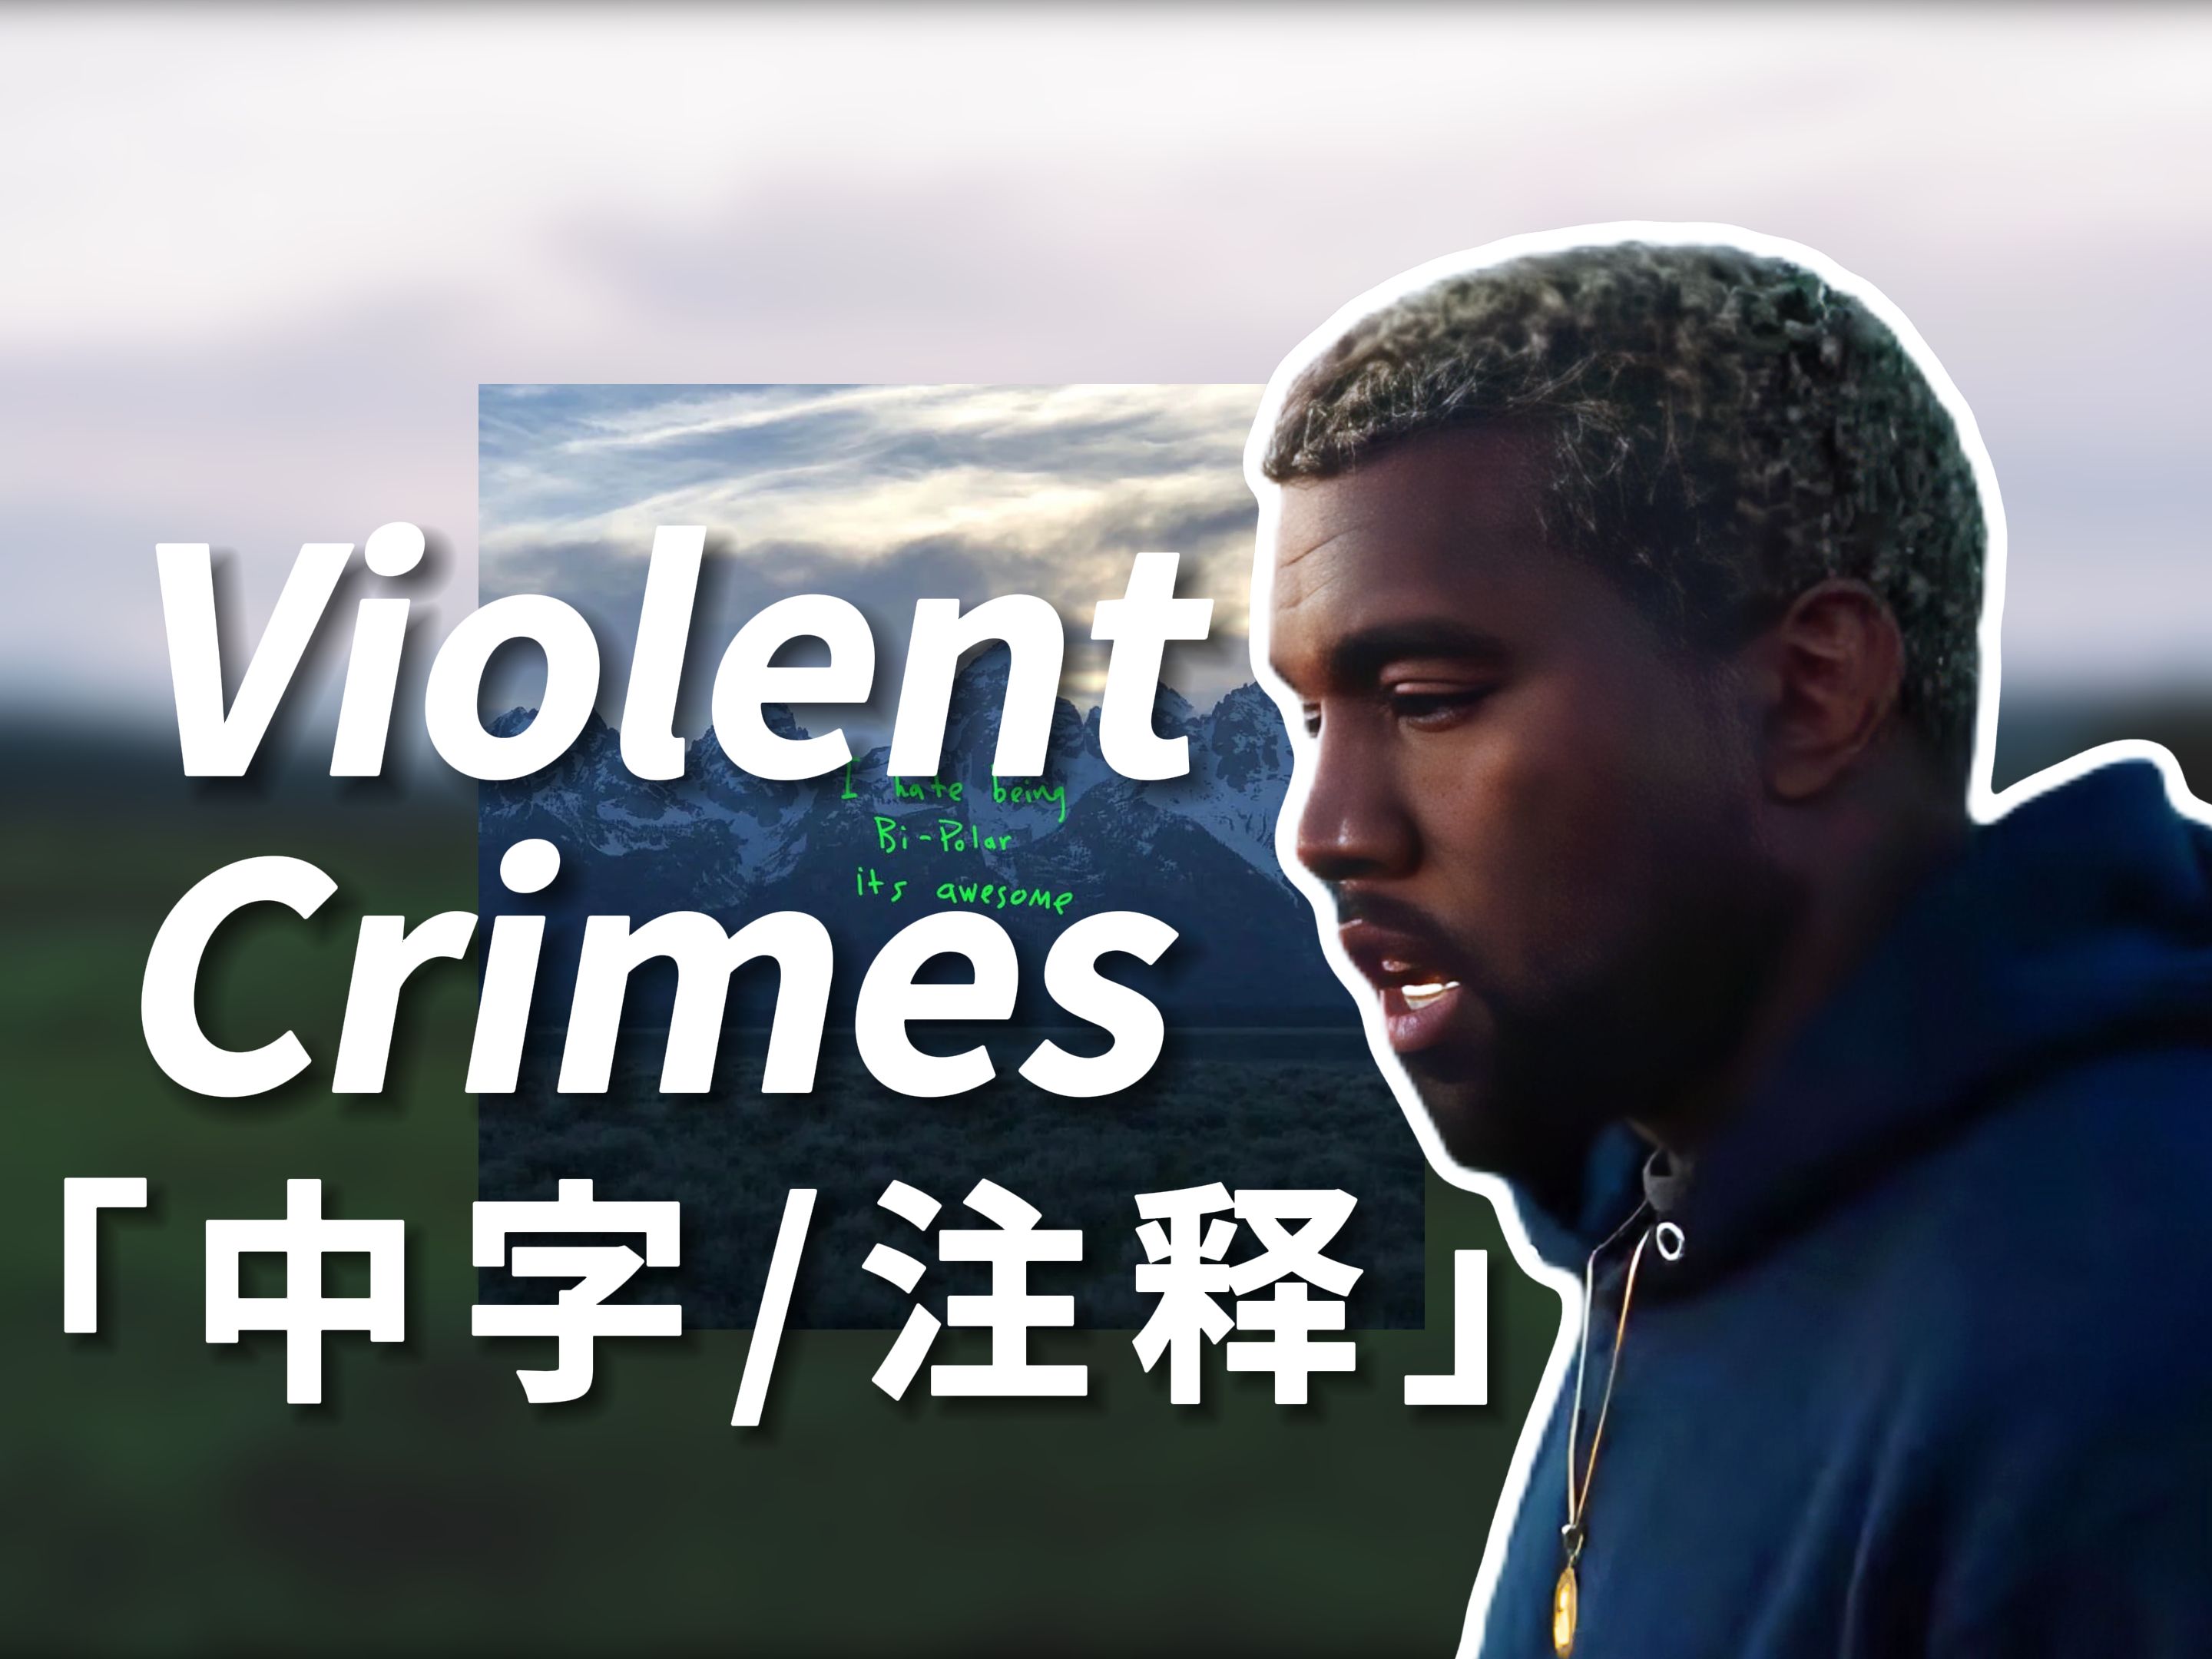 [中英/解析] Ye最温柔的一集 泰宝听哭了 Violent Crimes - Kanye West